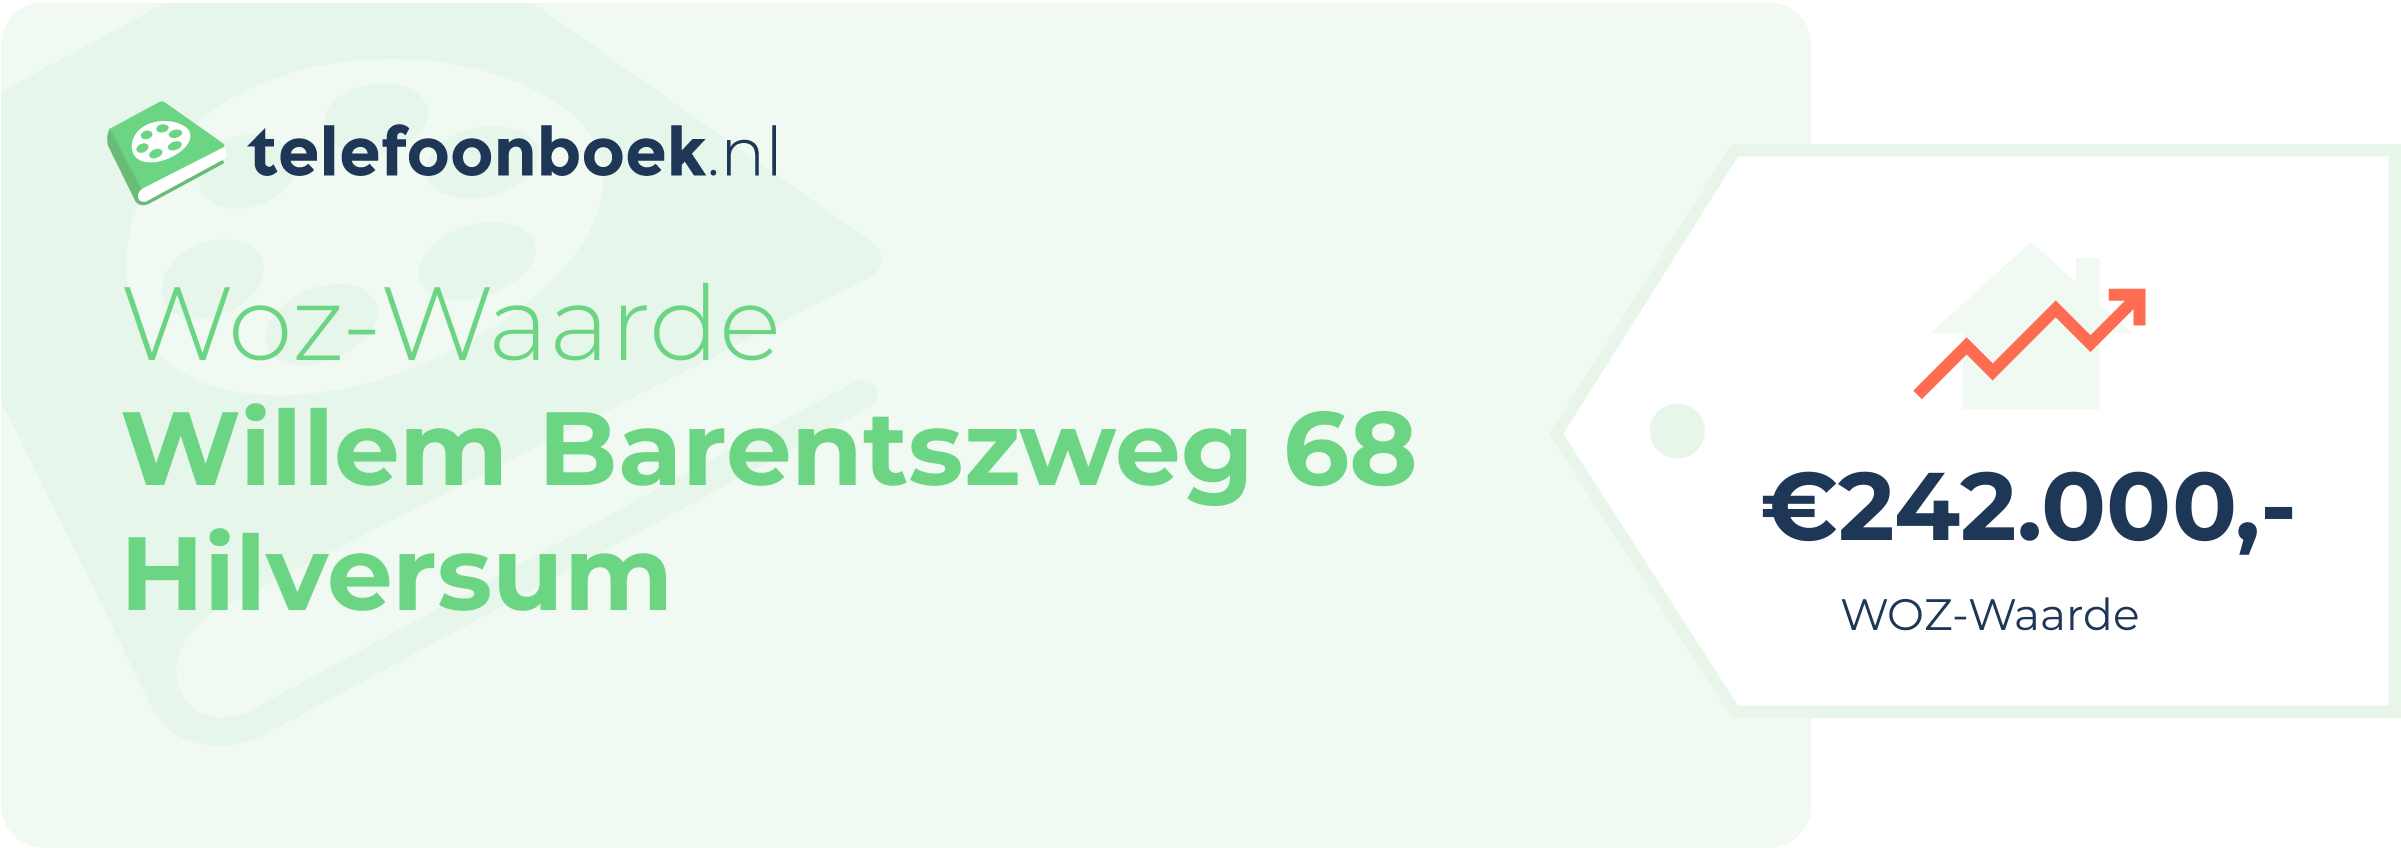 WOZ-waarde Willem Barentszweg 68 Hilversum